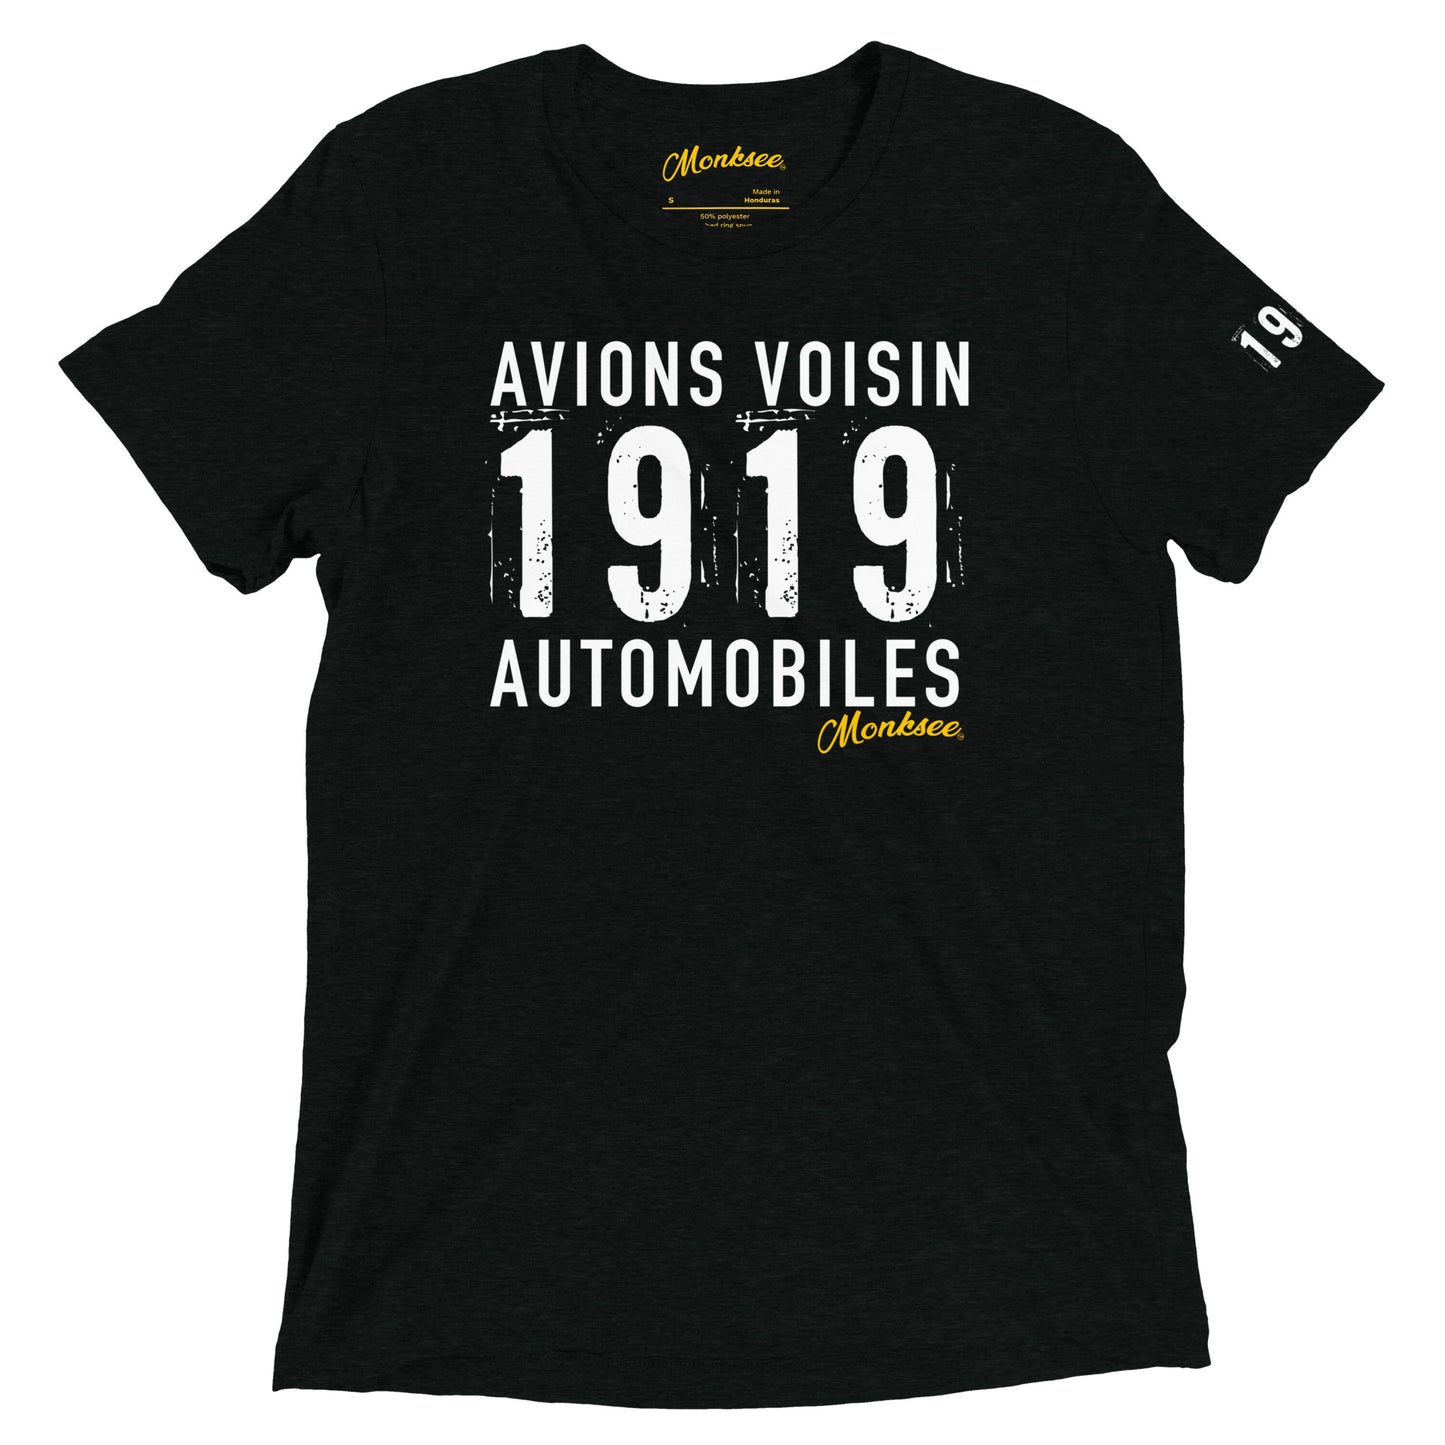 Avions Voisin Automobiles t-shirt.